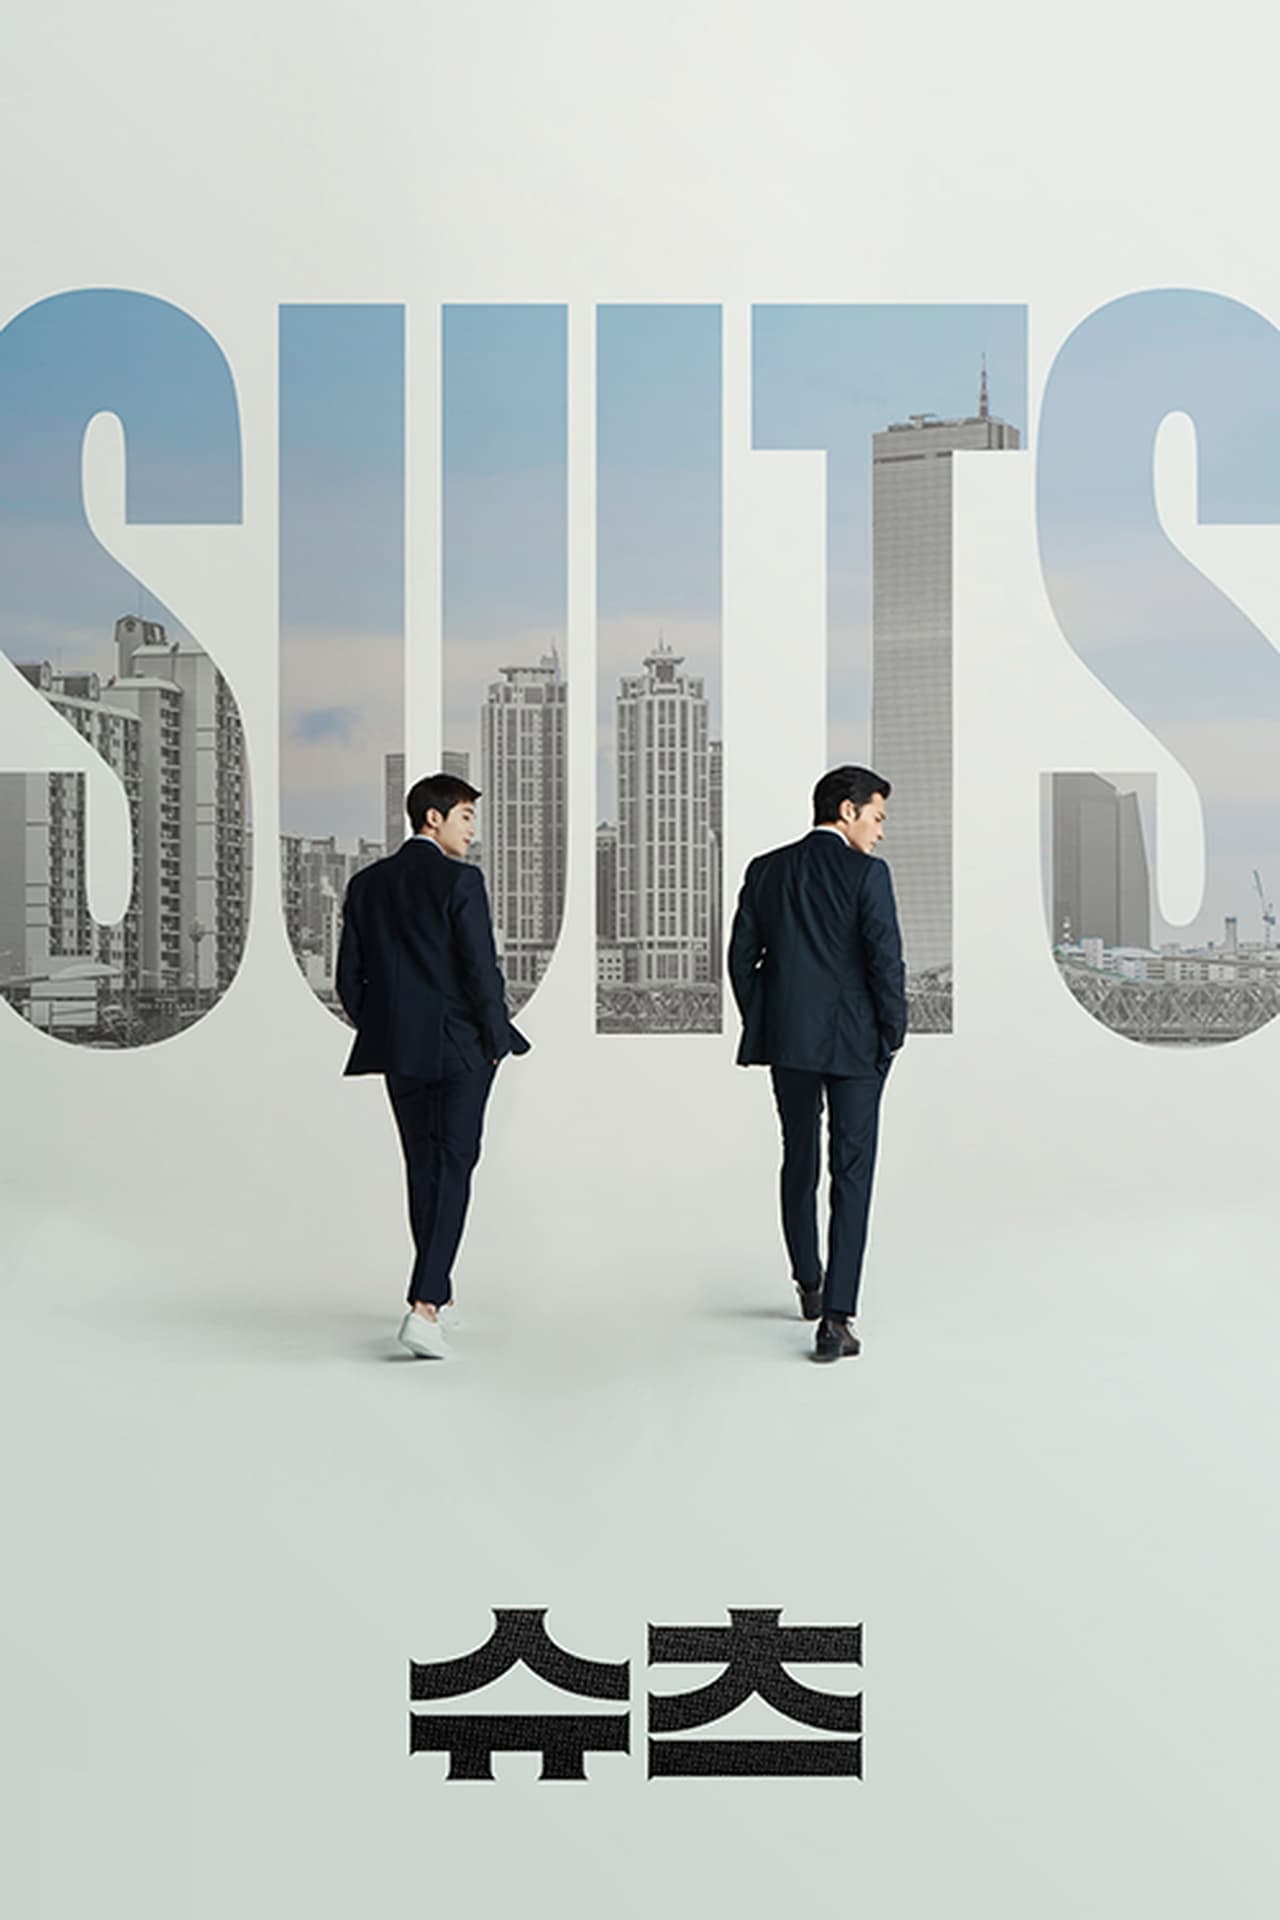 Suits Season 1